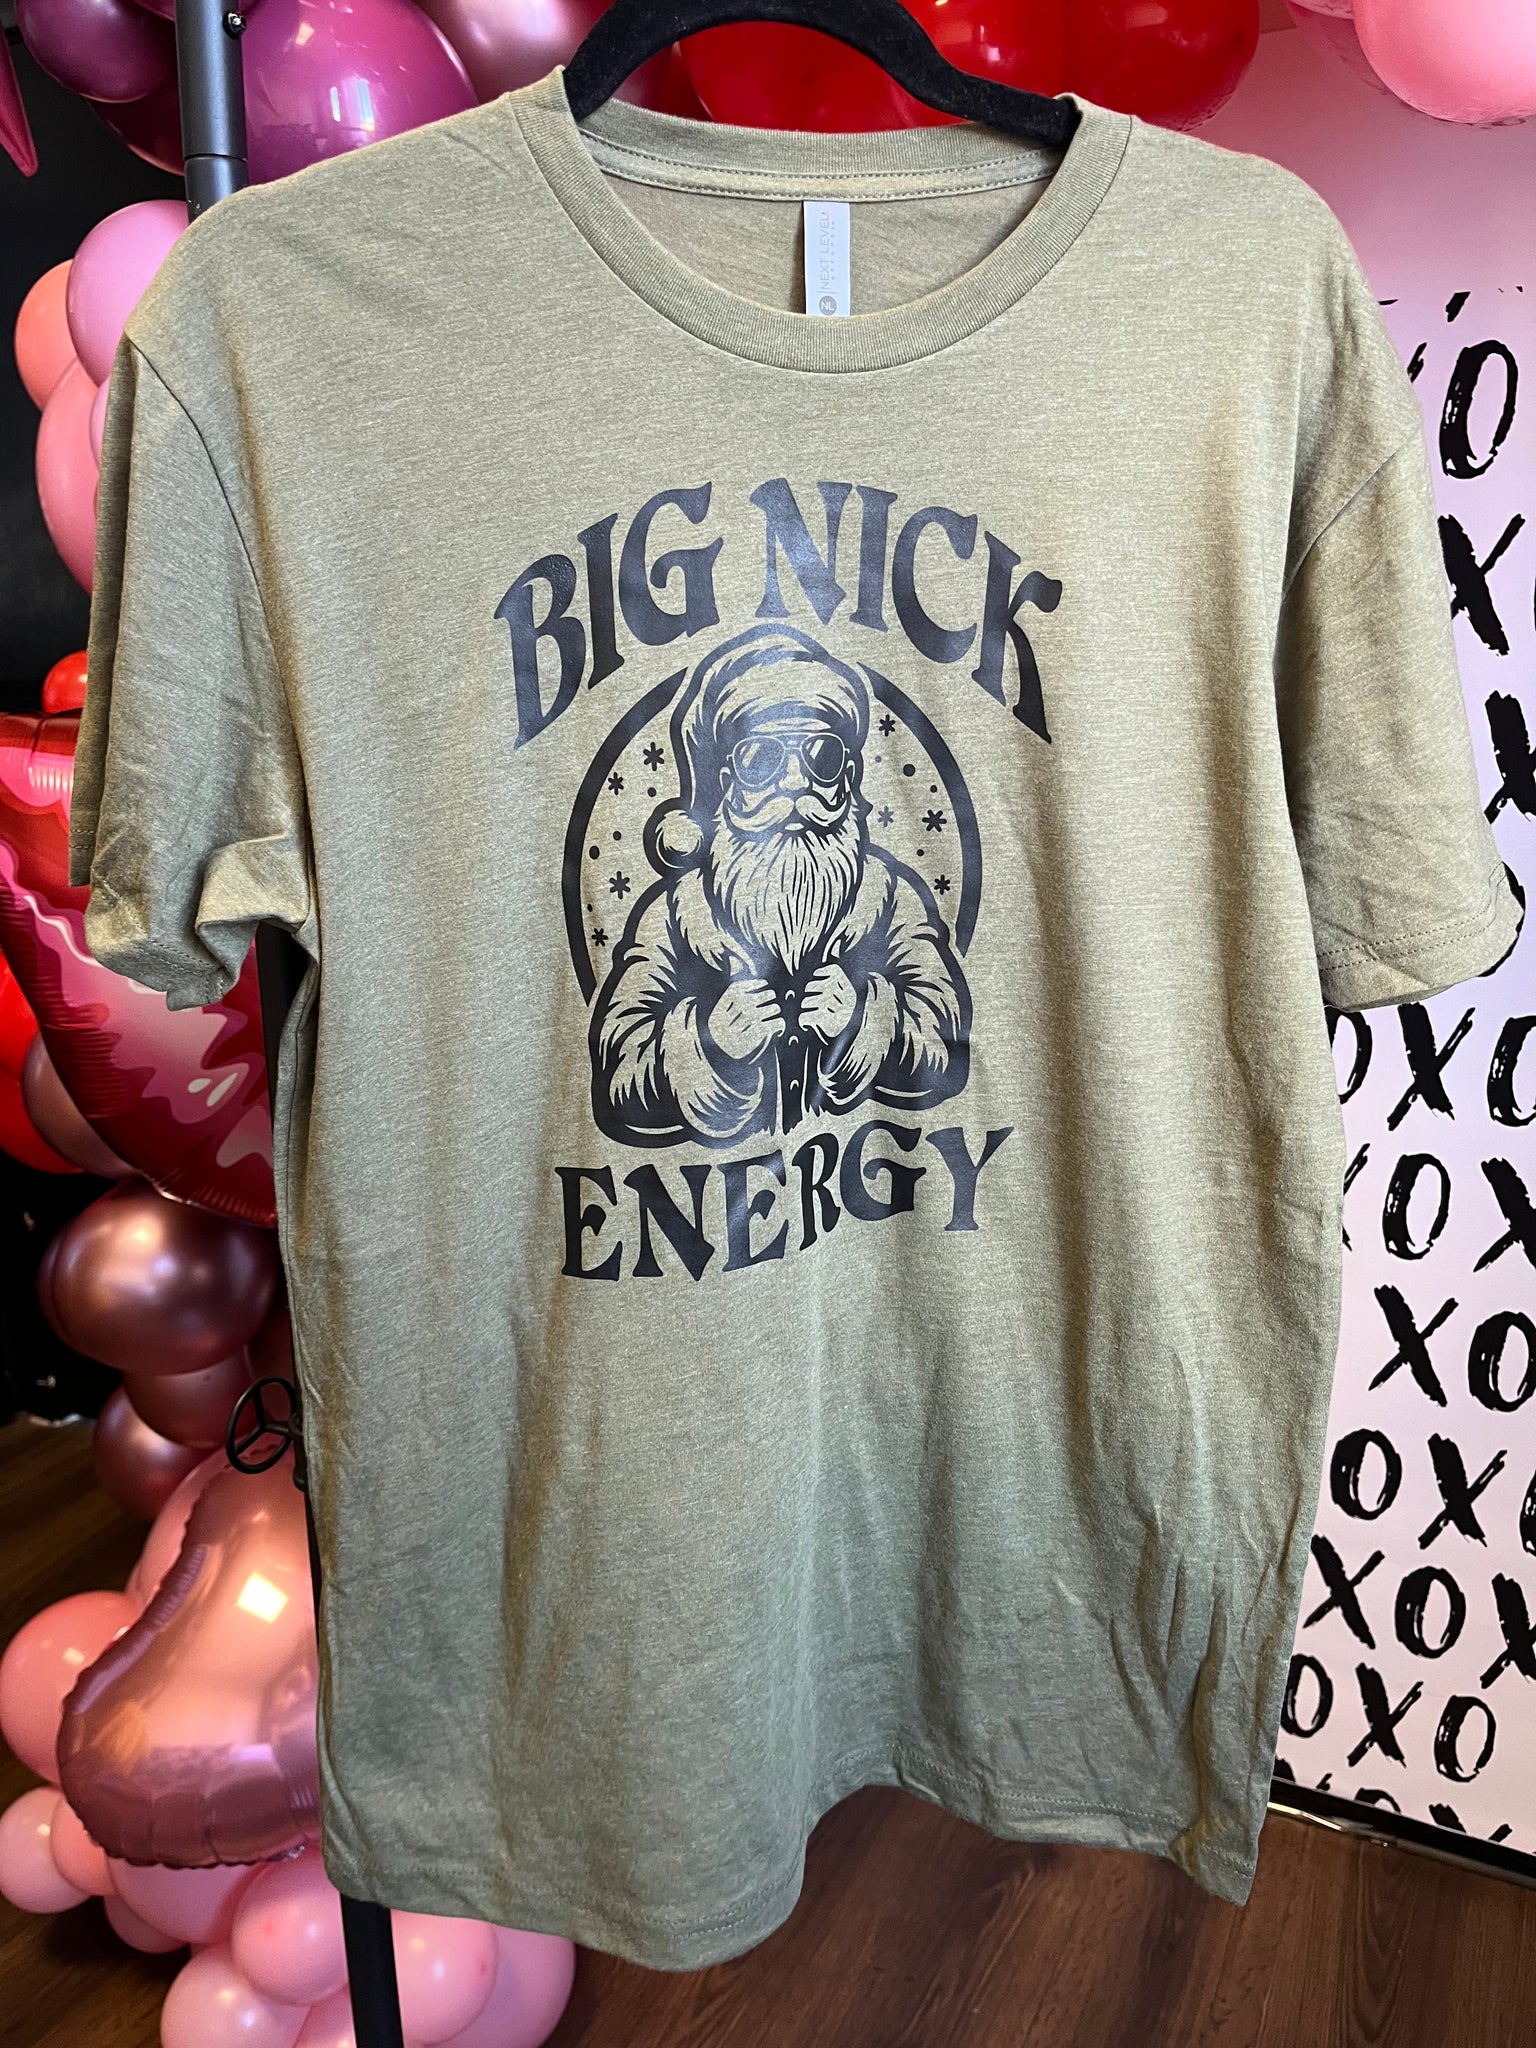 Big nick ￼Energy size medium